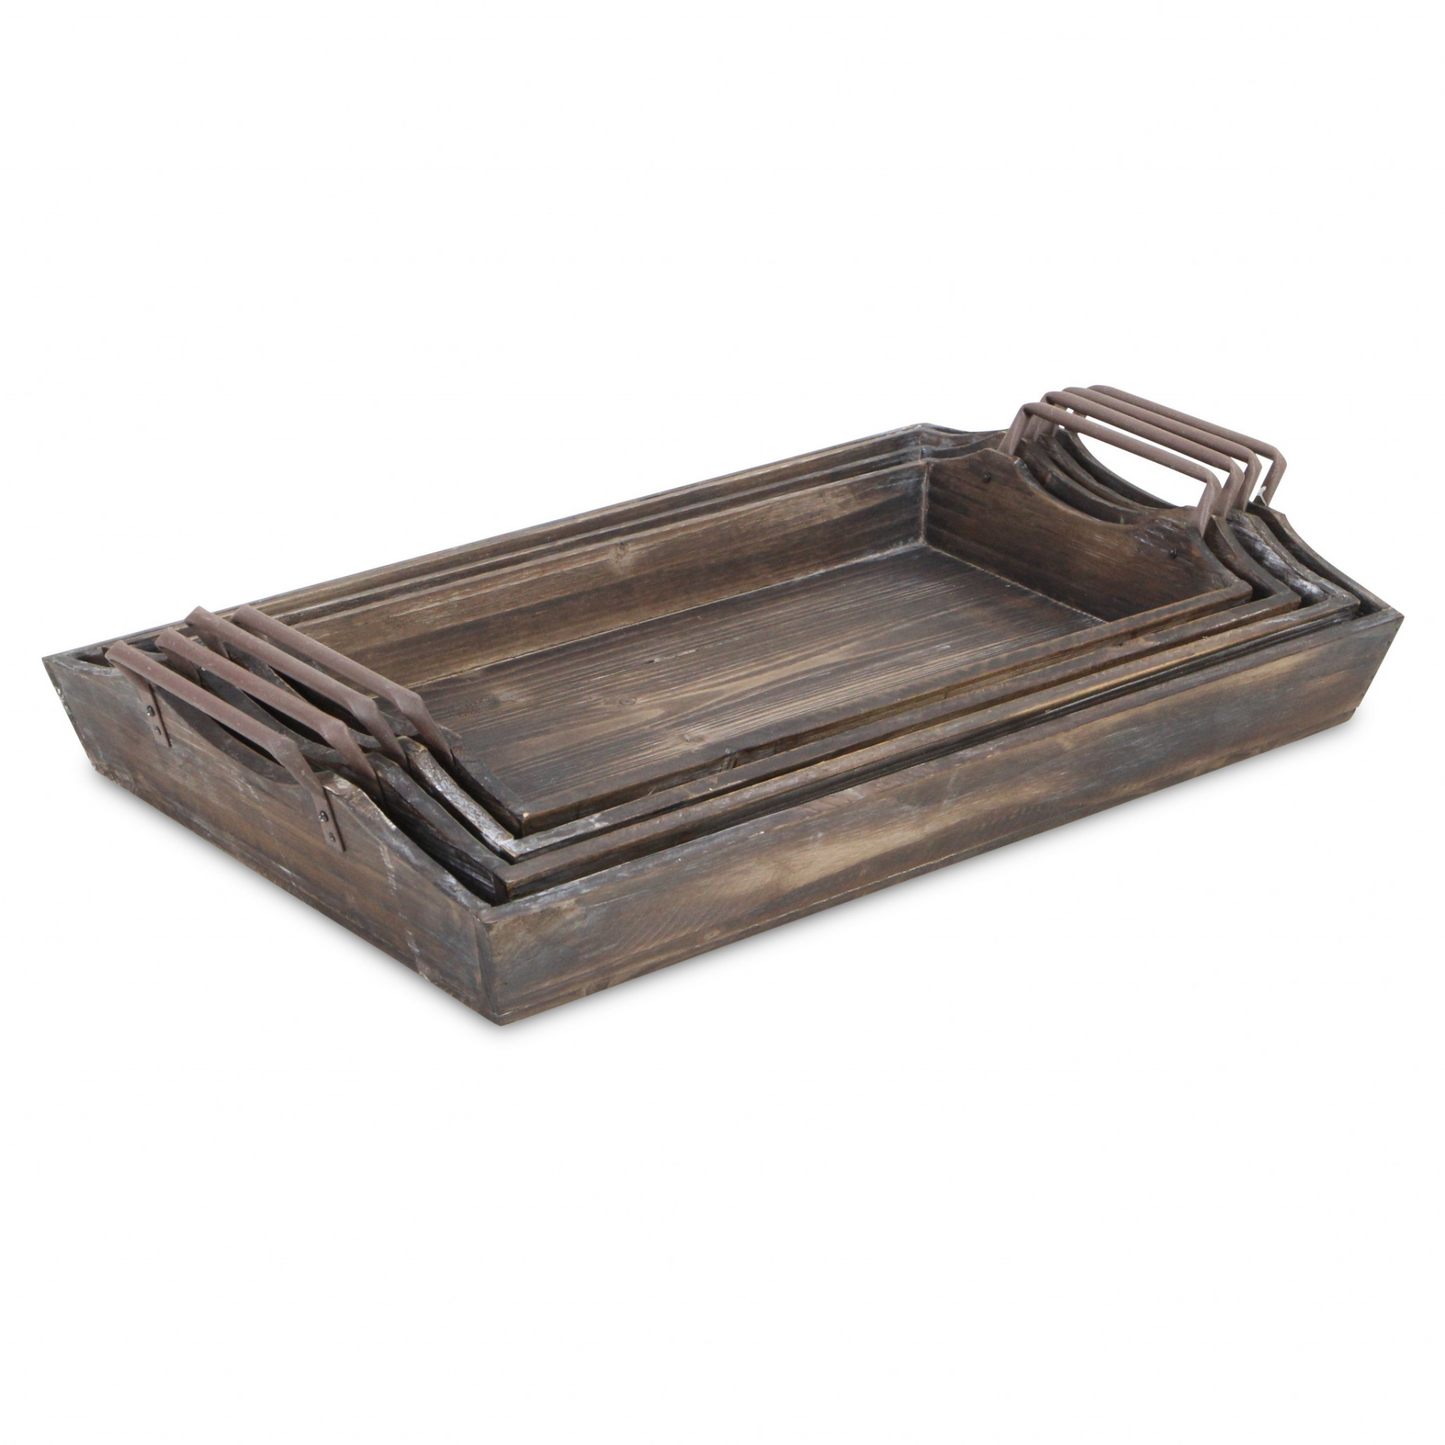 22" Brown Rectangular Wood Handmade Tray Handles - Serve in Style